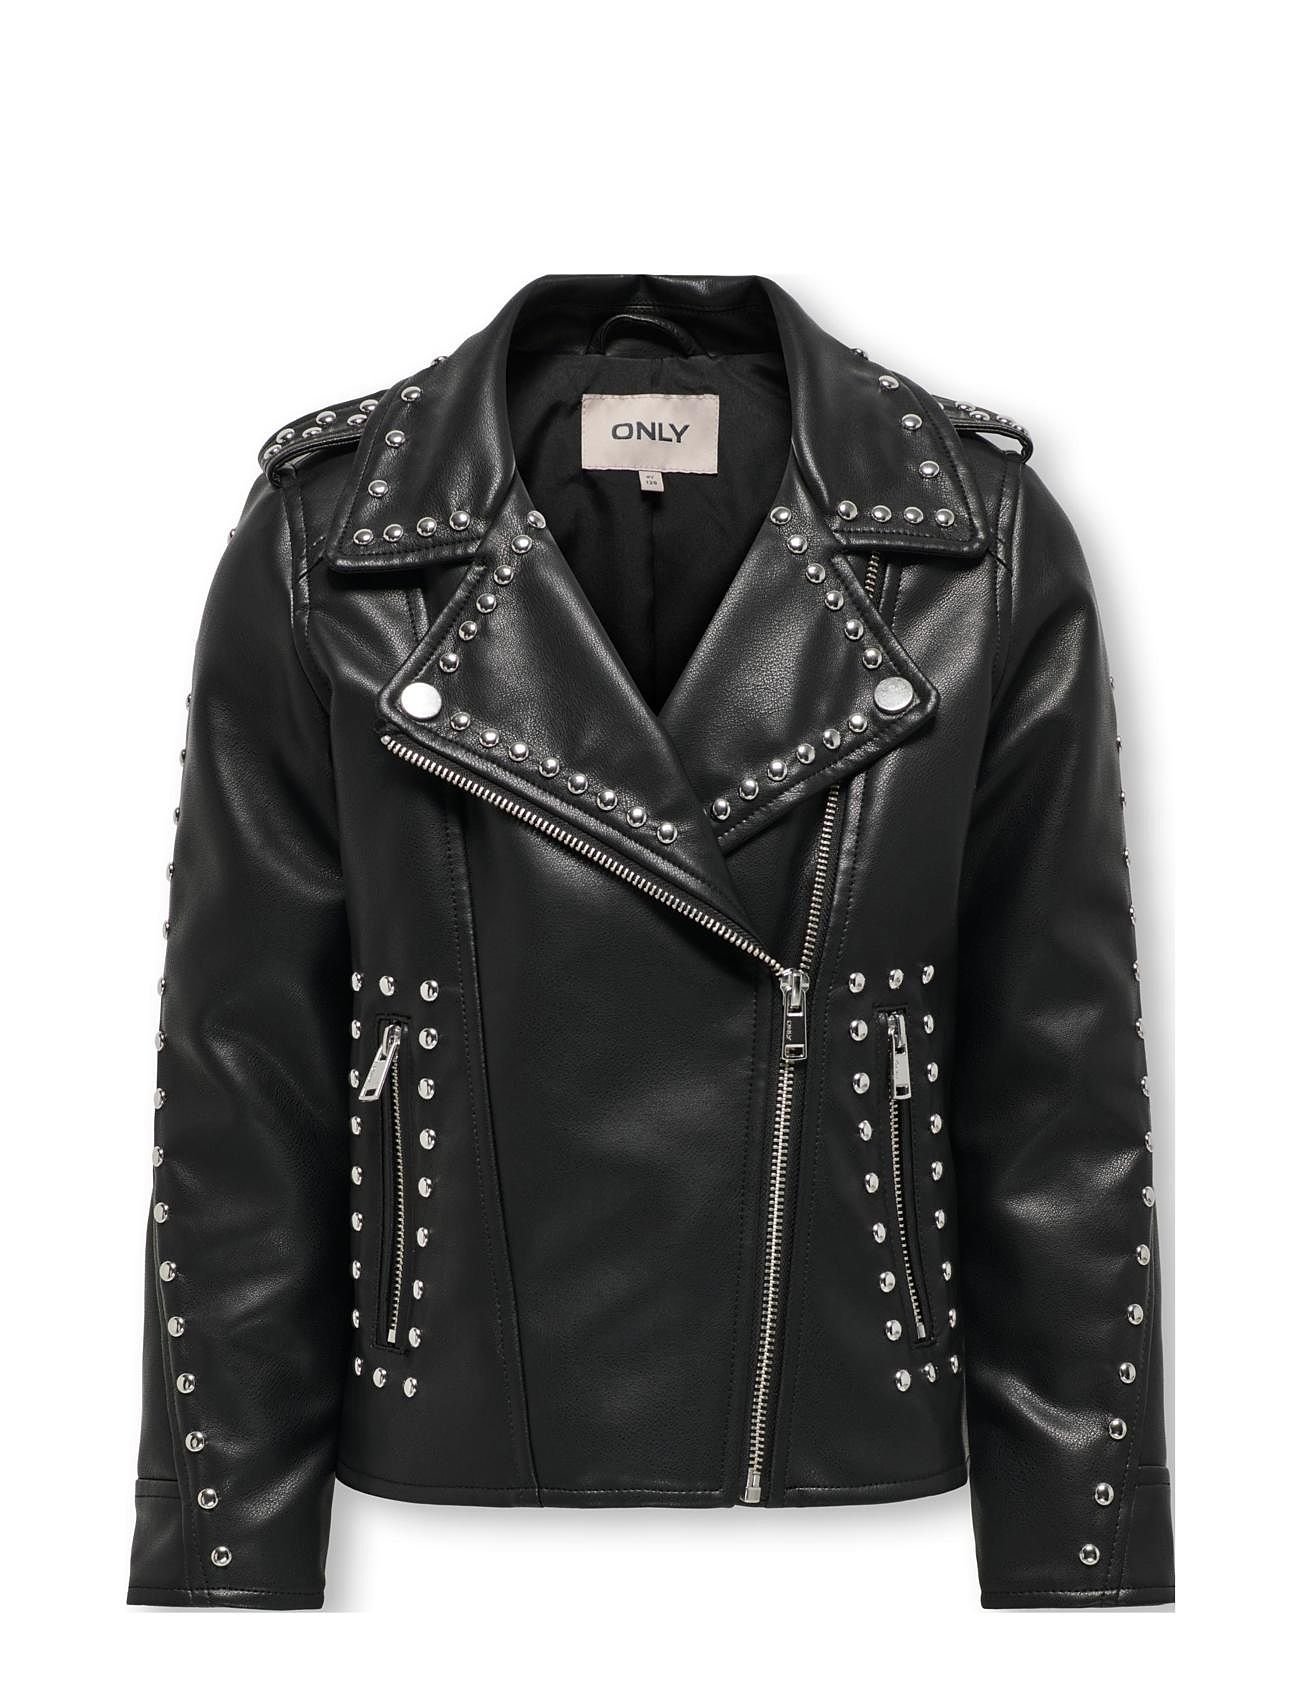 Kogsia Studded Faux Leather Biker Otw Outerwear Jackets & Coats Leather Jacket Black Kids Only